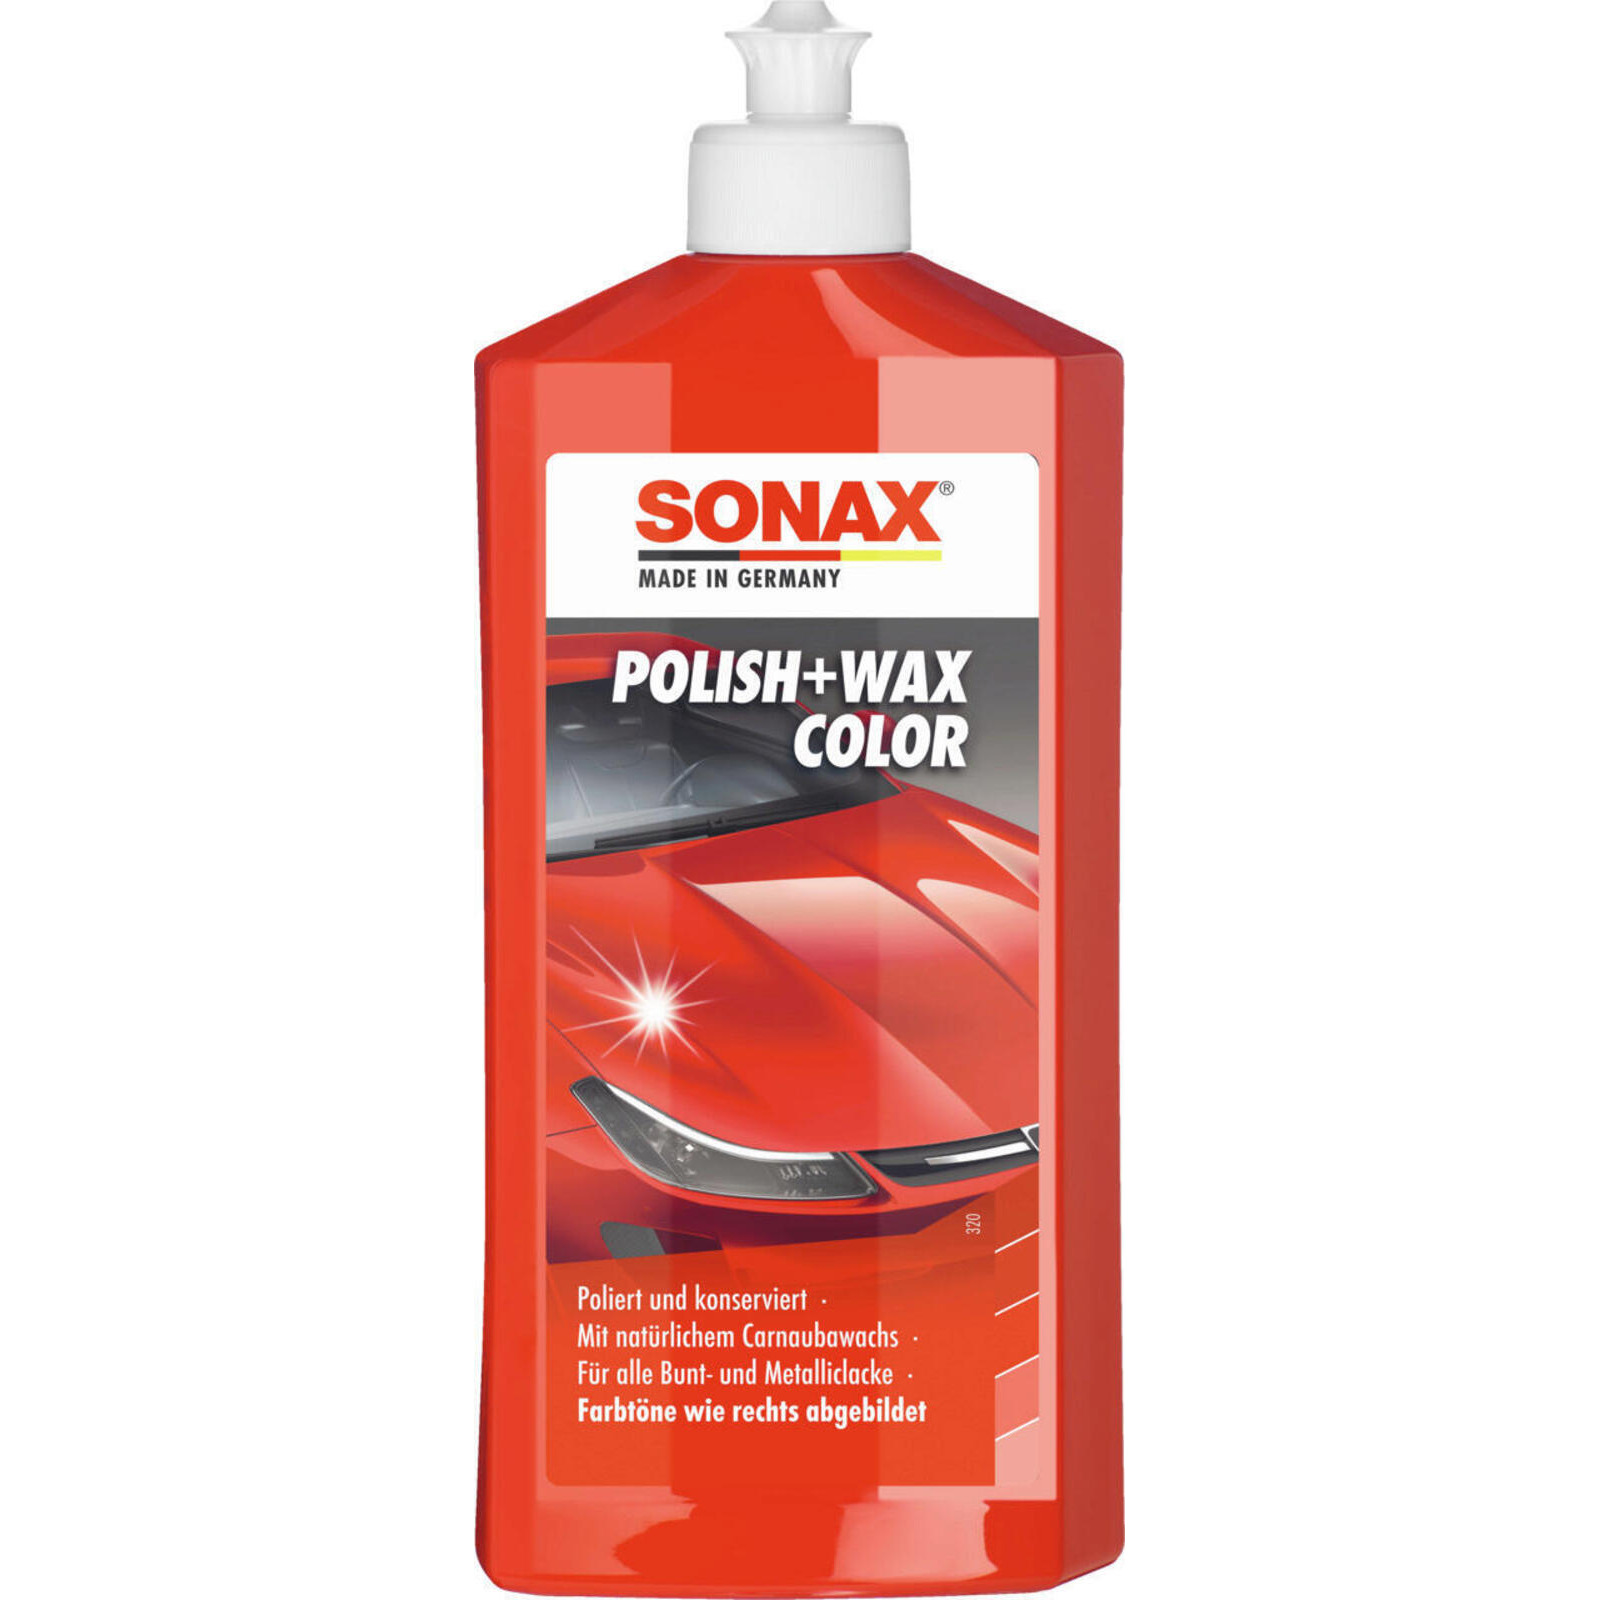 SONAX Polish Polish & wax color (red) NanoPro